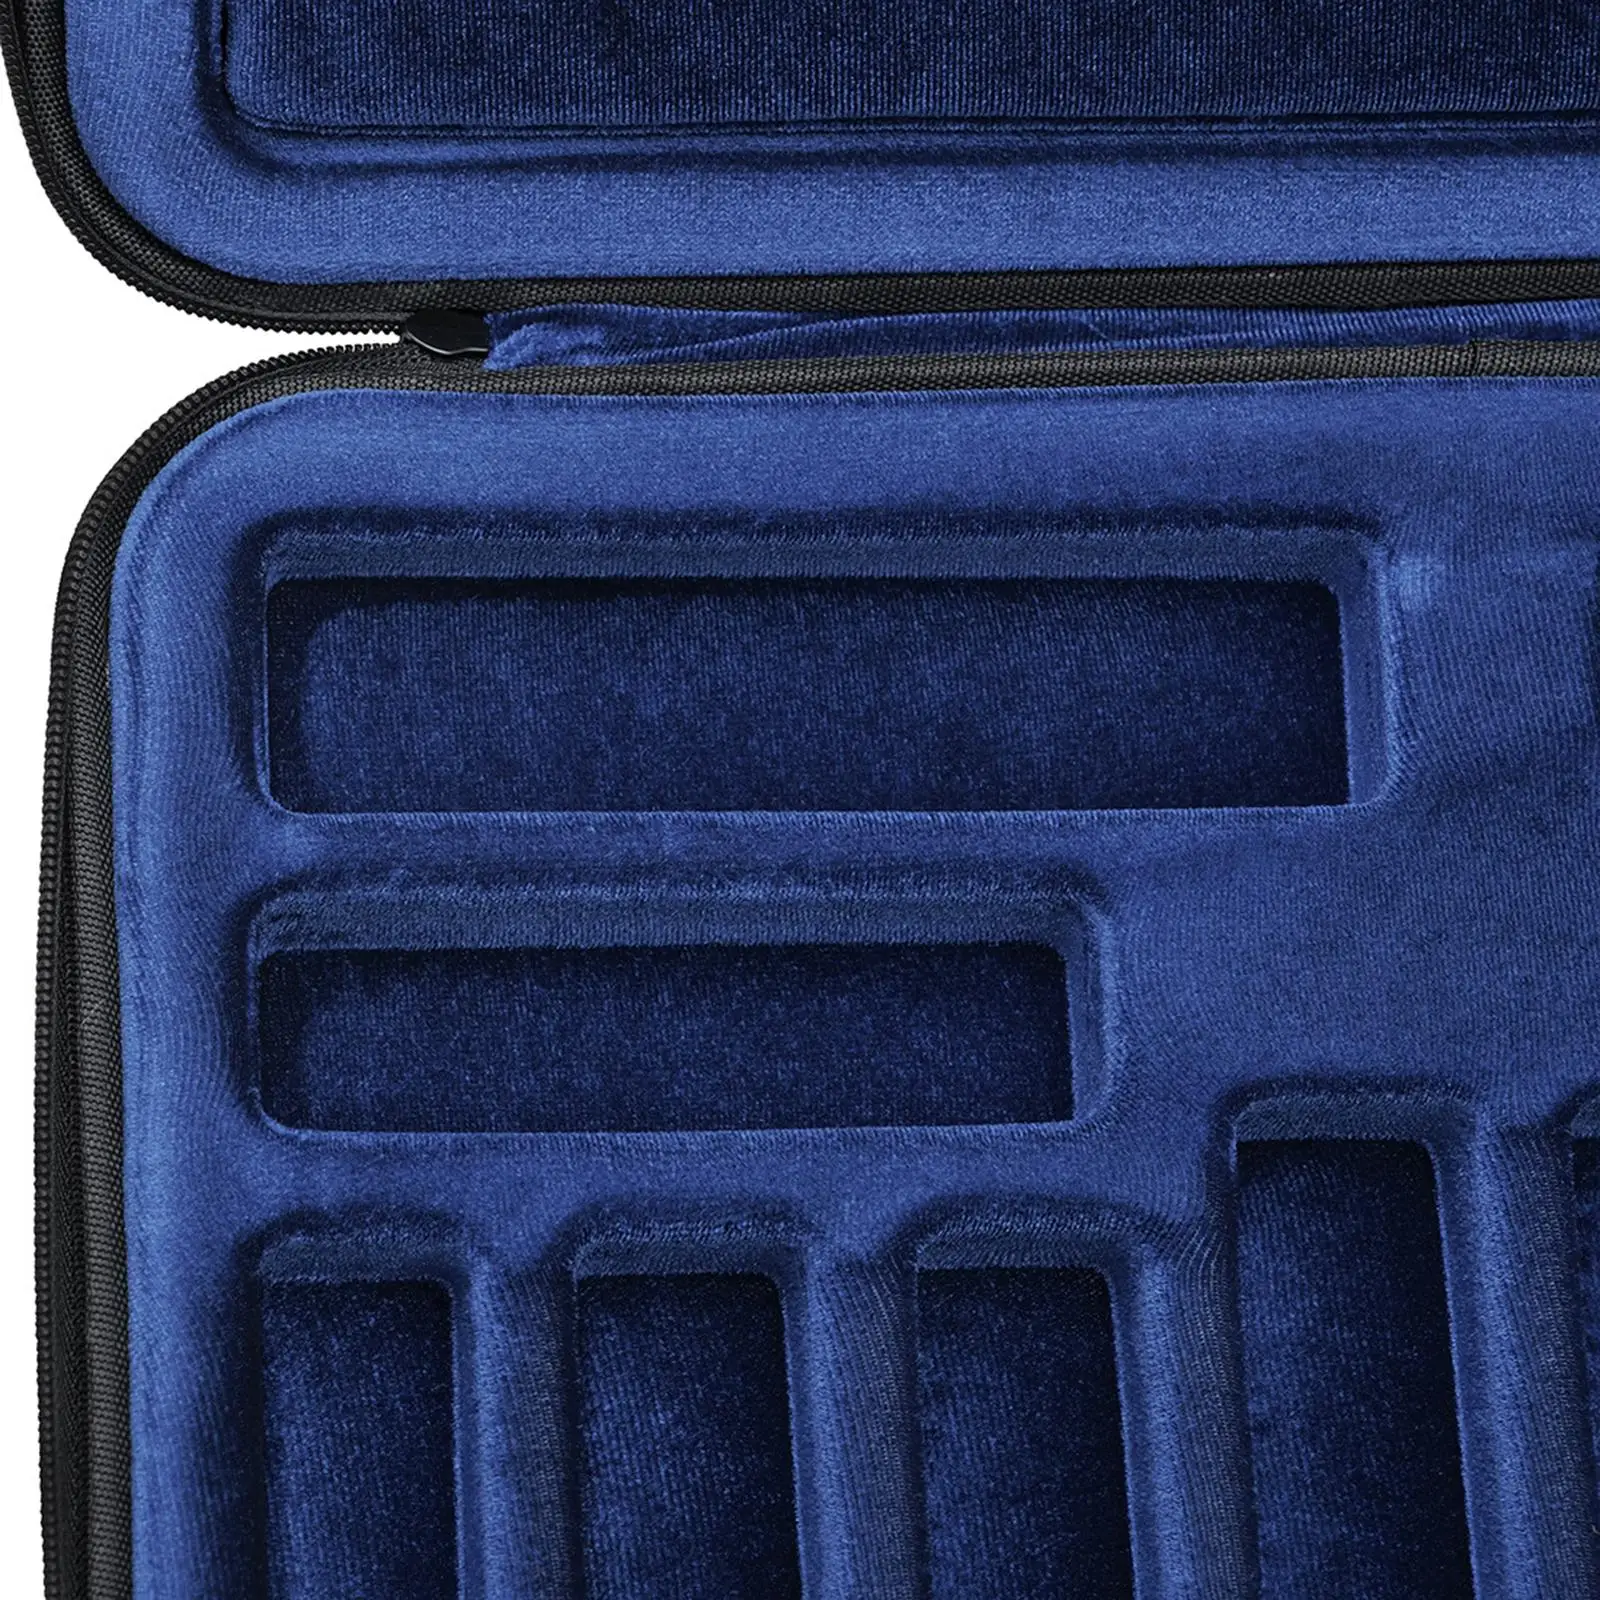 Saxphone Mouthpiece Case, Woodwind Mouthpiece Case, Hard Case Pouch 12 Piece with Flannel Bag Storage Bag Saxophone Reed Case